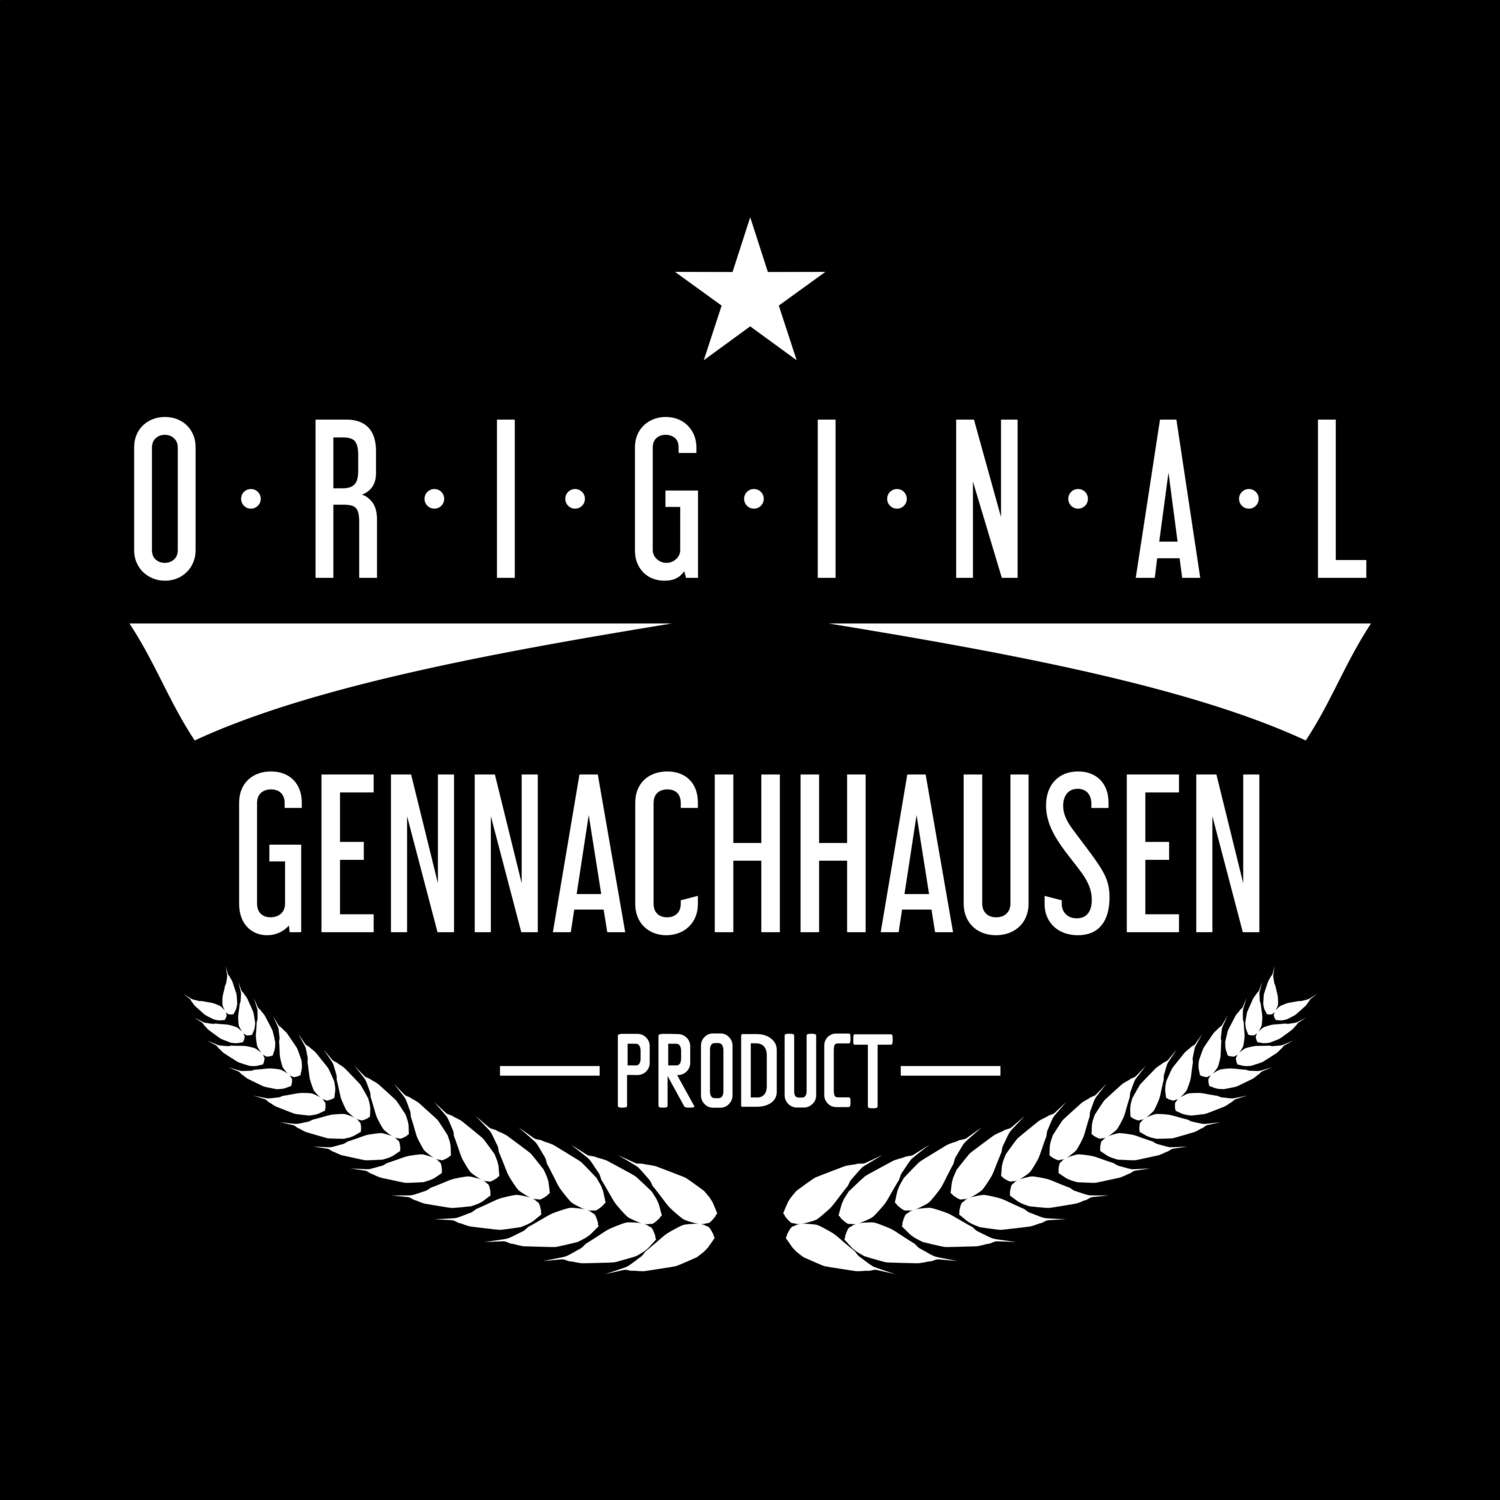 Gennachhausen T-Shirt »Original Product«